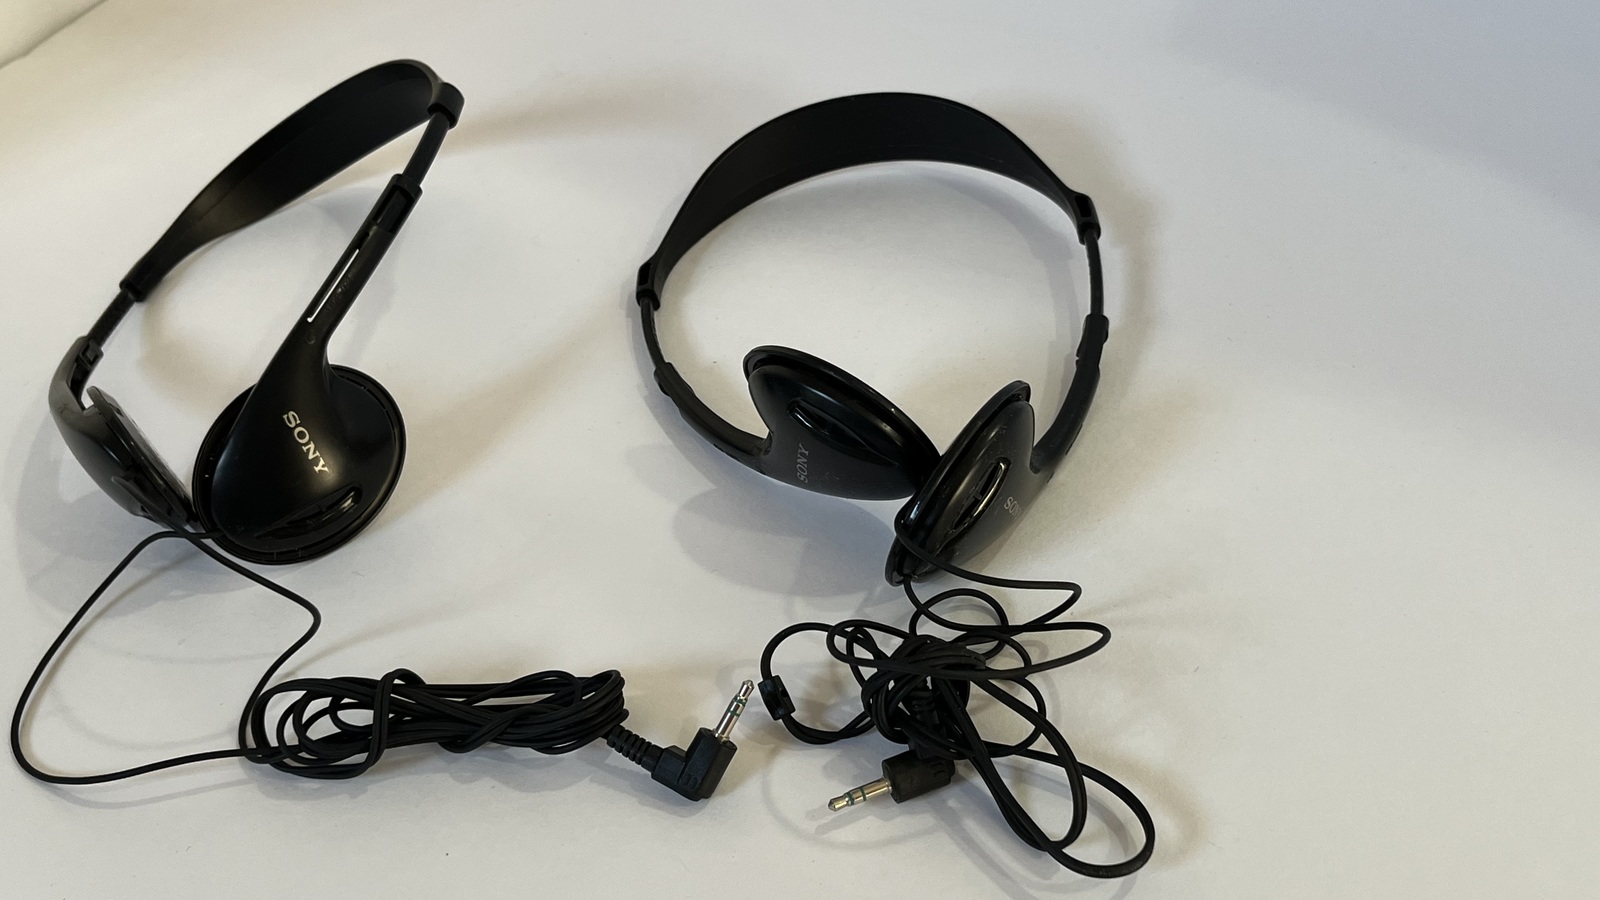 LOT of 2 Sony Adjustable Headphones Walkman MP3 Ipod - Tested - $34.99